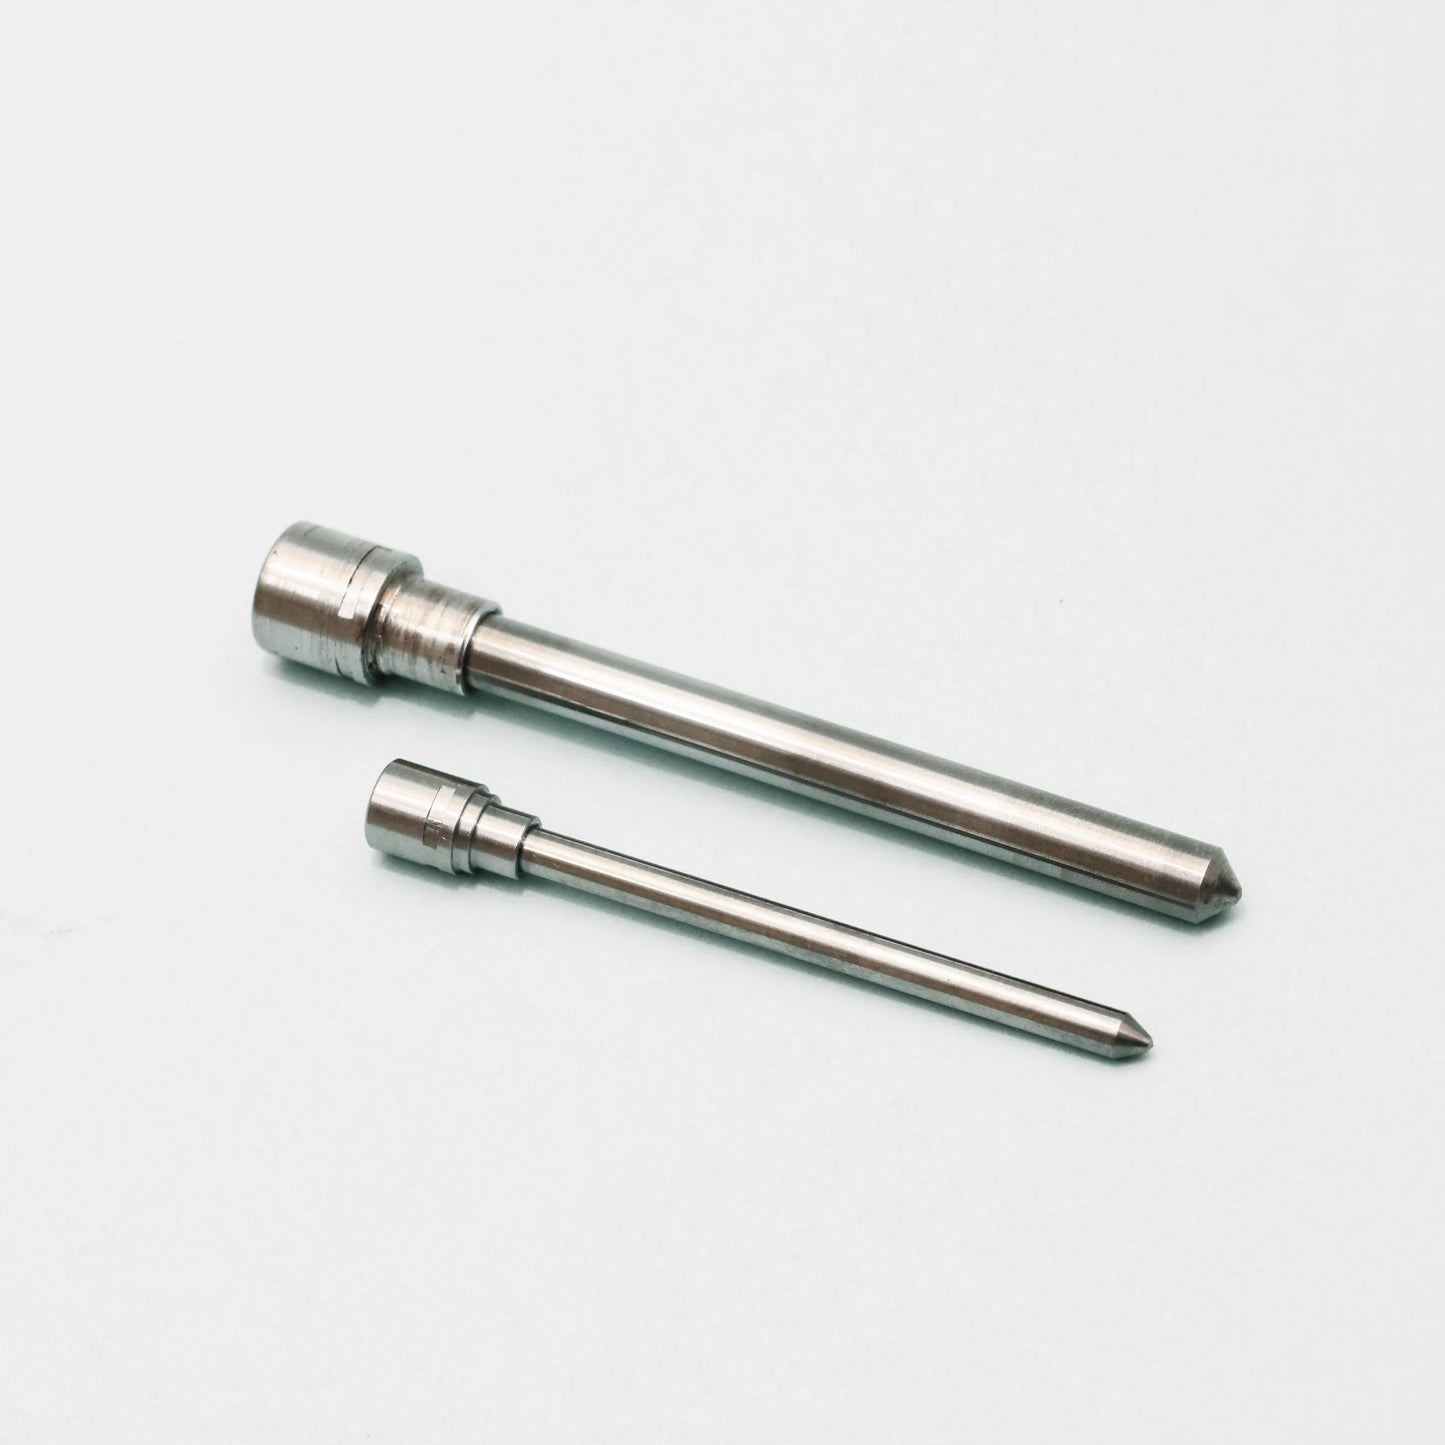 BSD Carbide Pin - 60° Tip angle, Standard Length